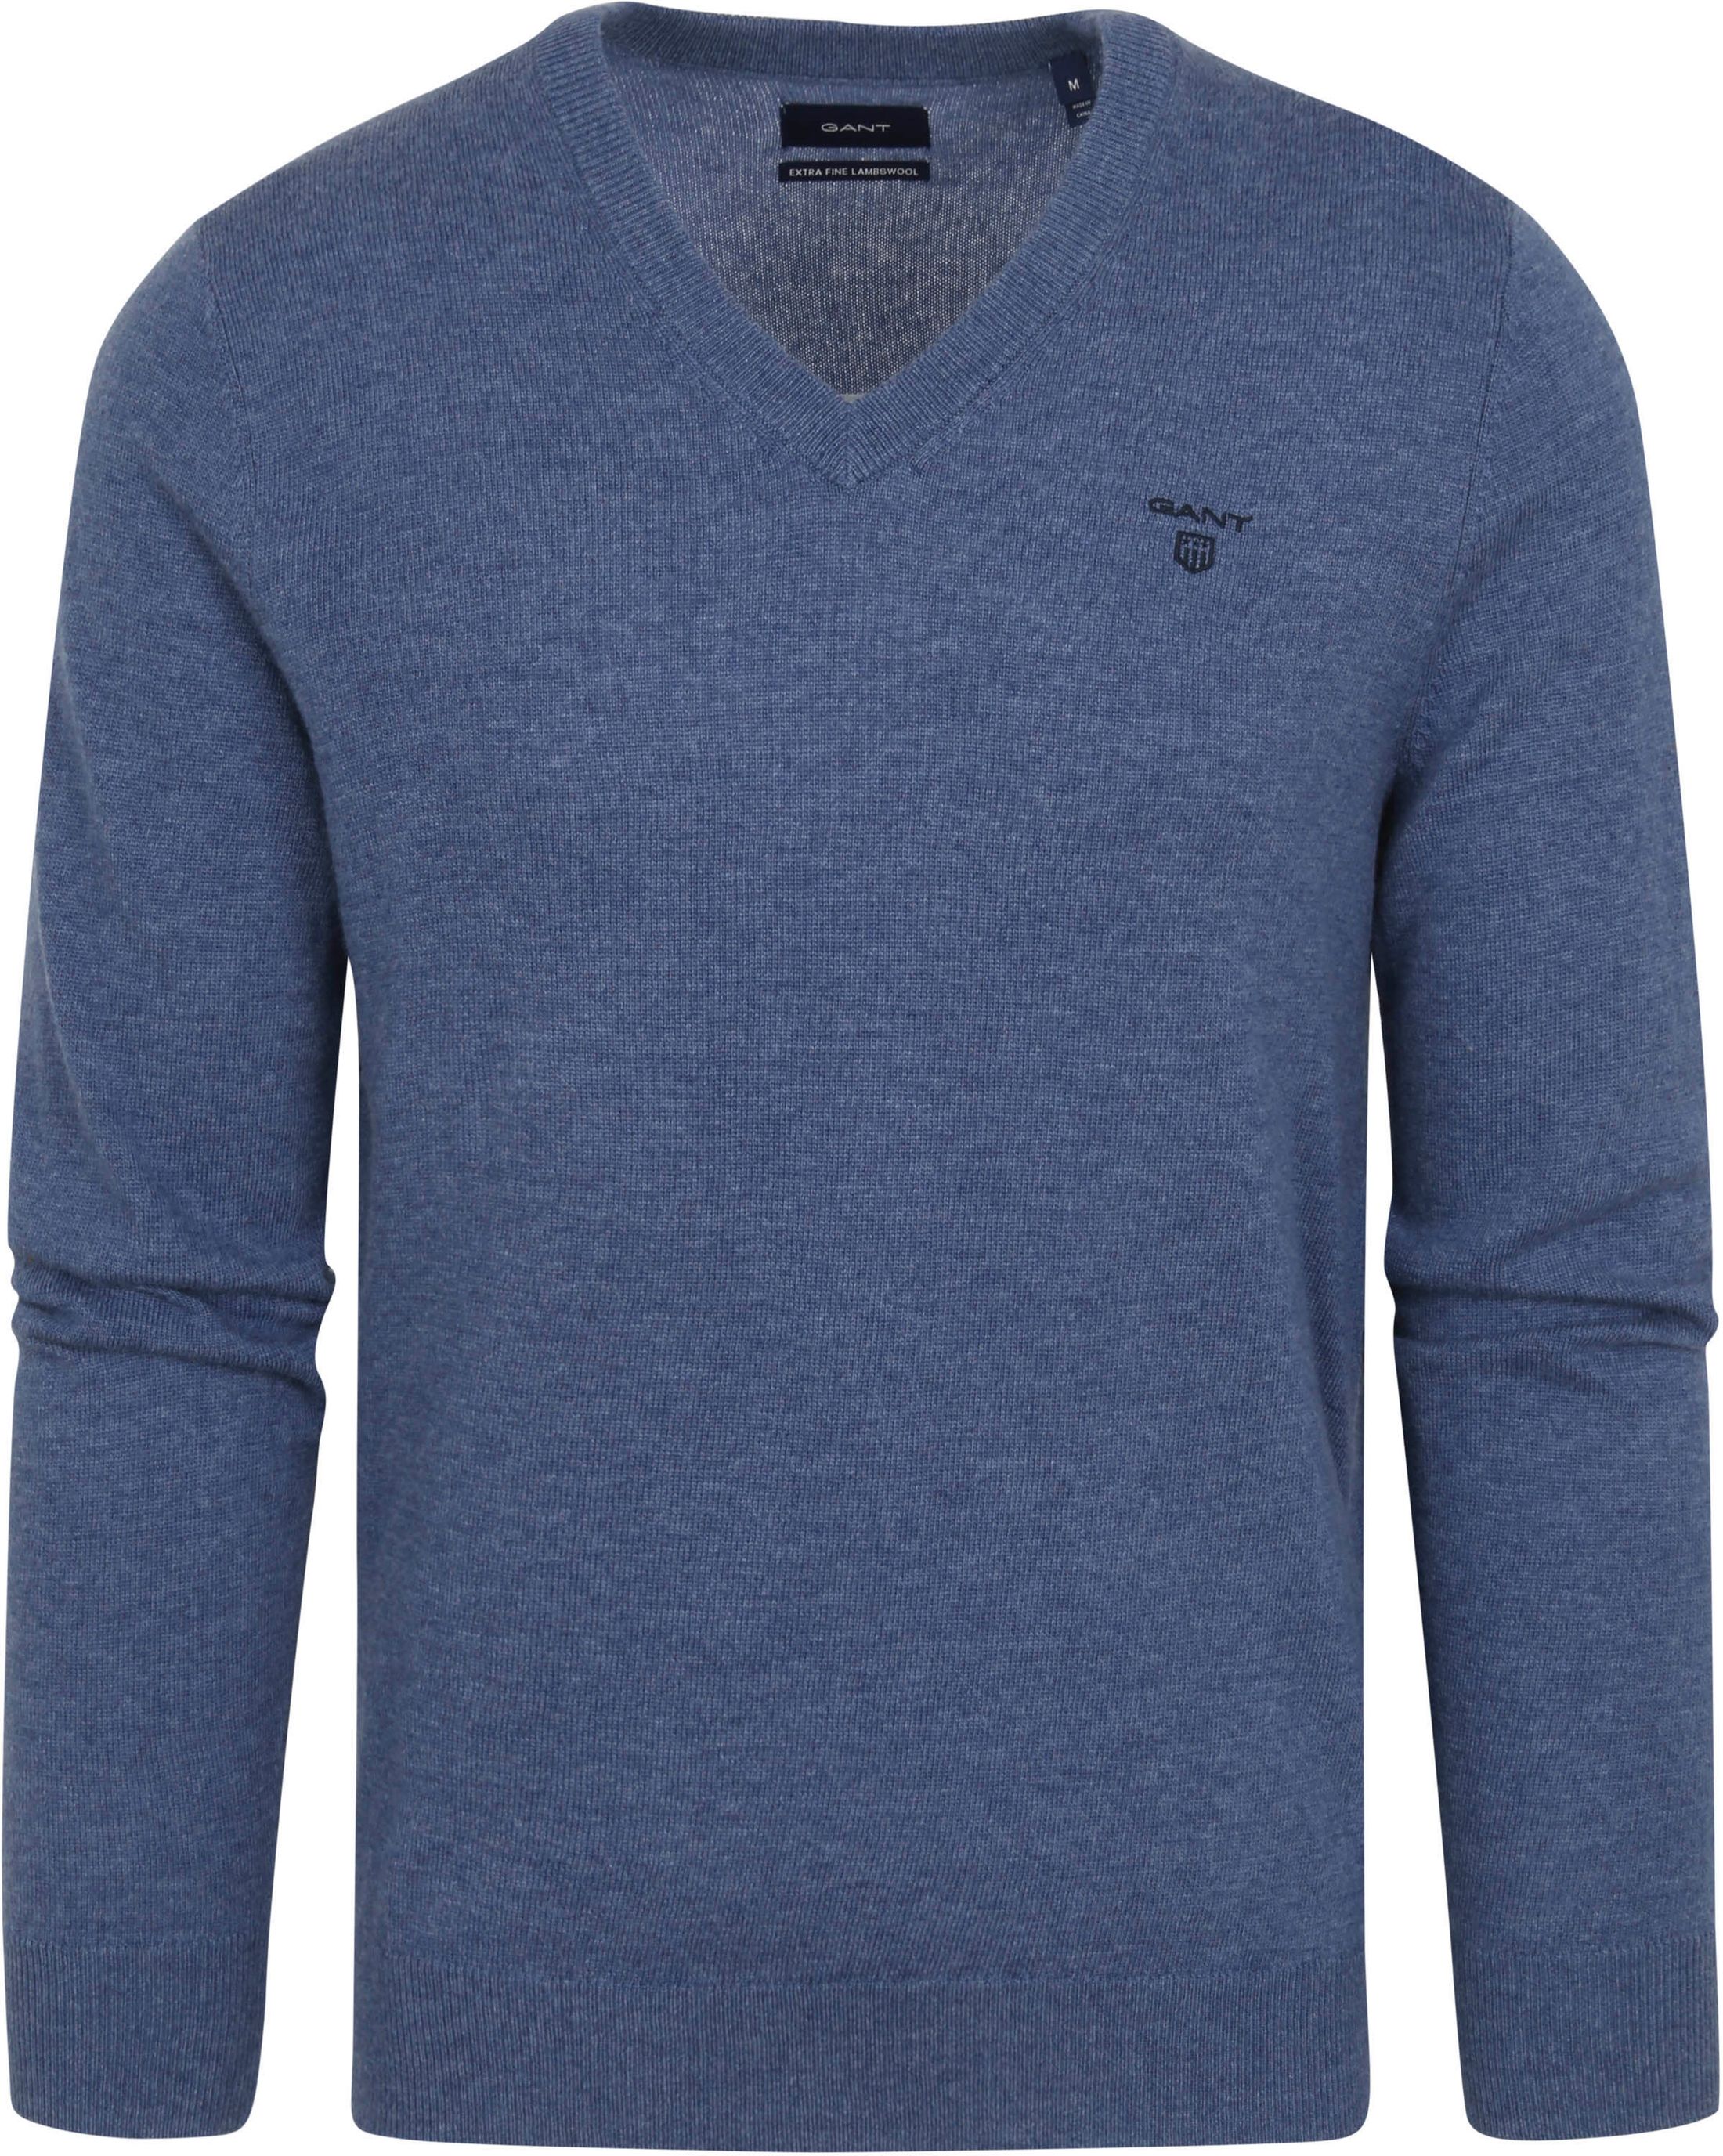 Gant Sweater Lambswool Blue size M